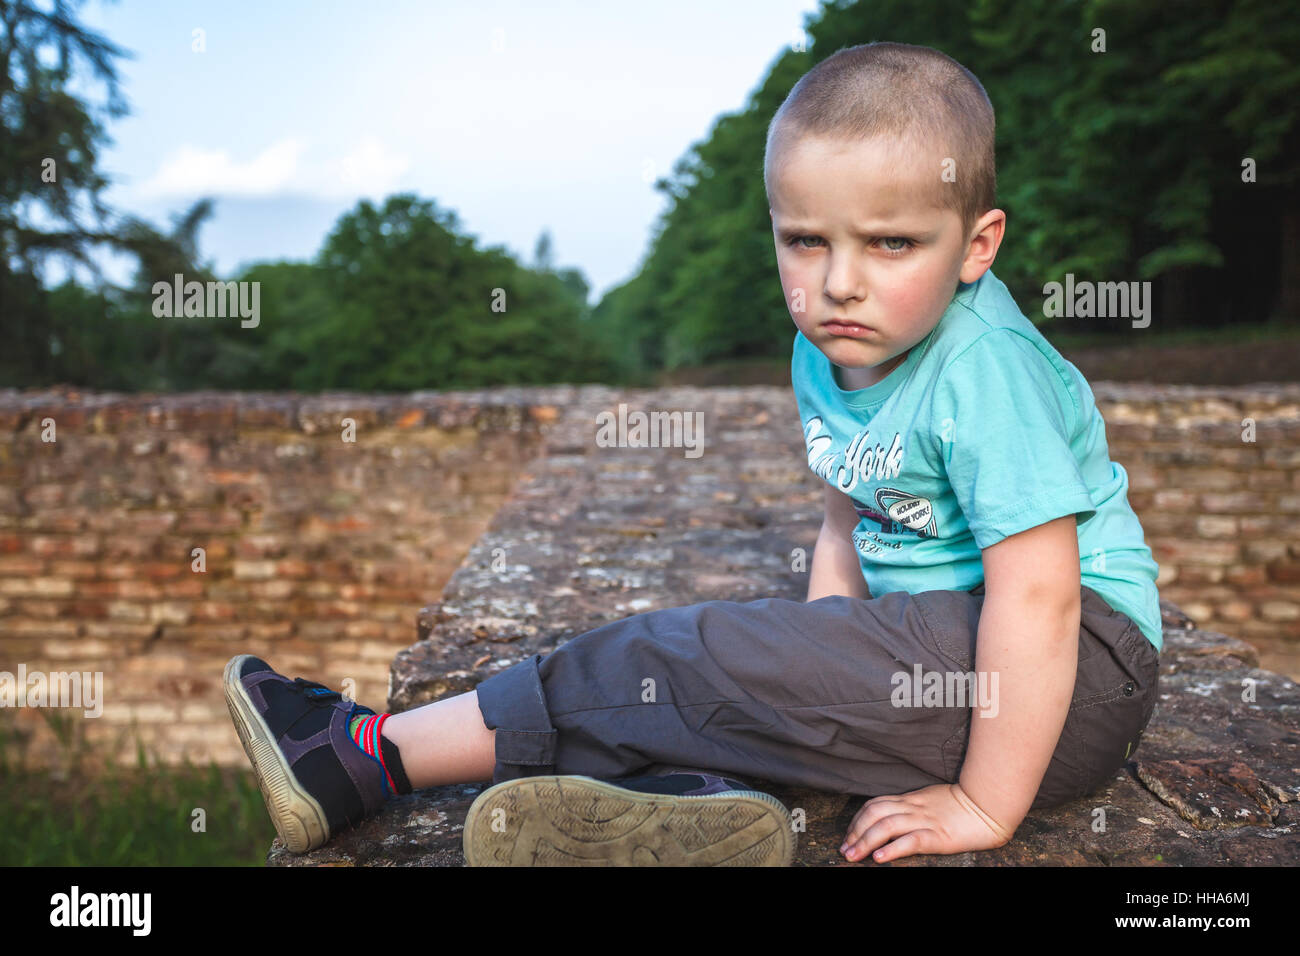 Sad and angry boy sitting on a brick wall Stock Photo